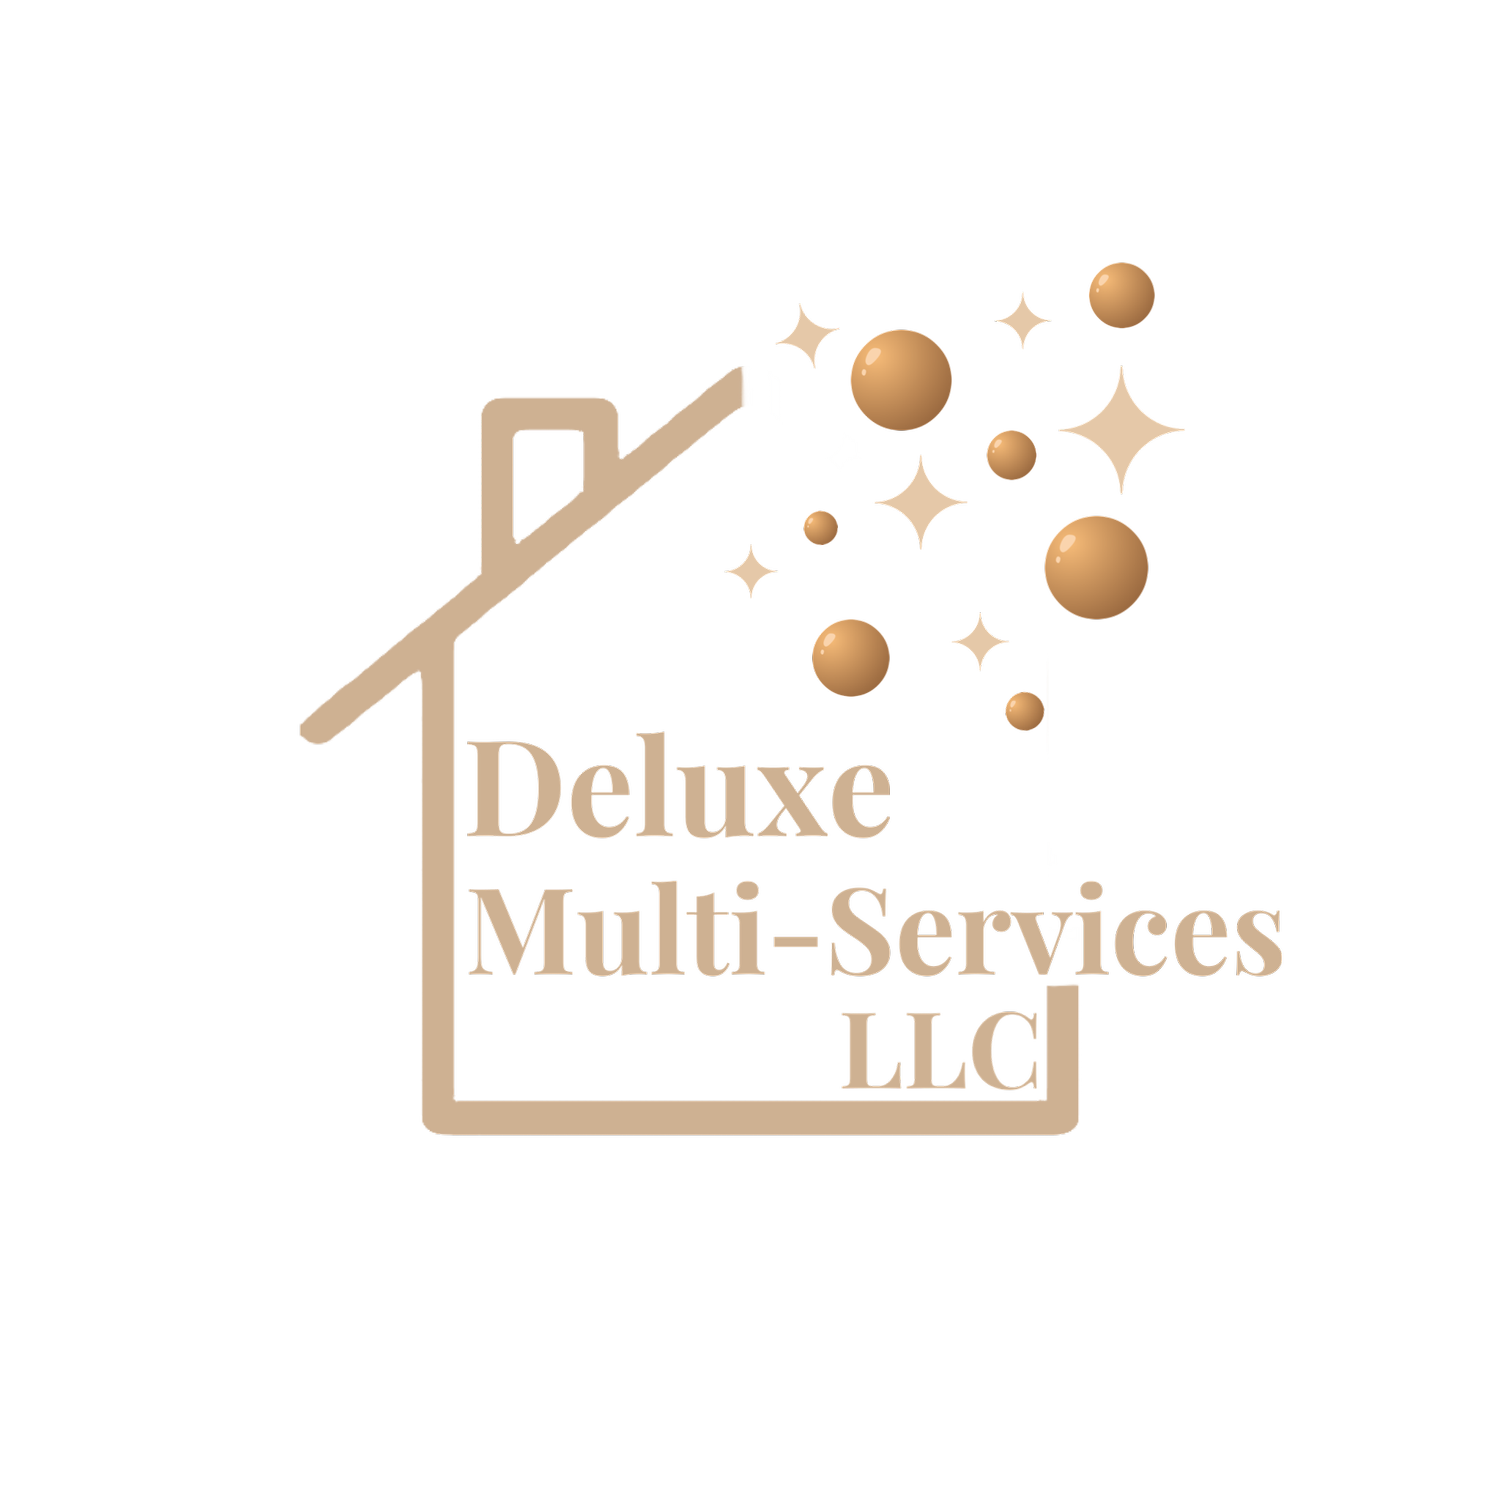 Deluxe Multi-Services LLC